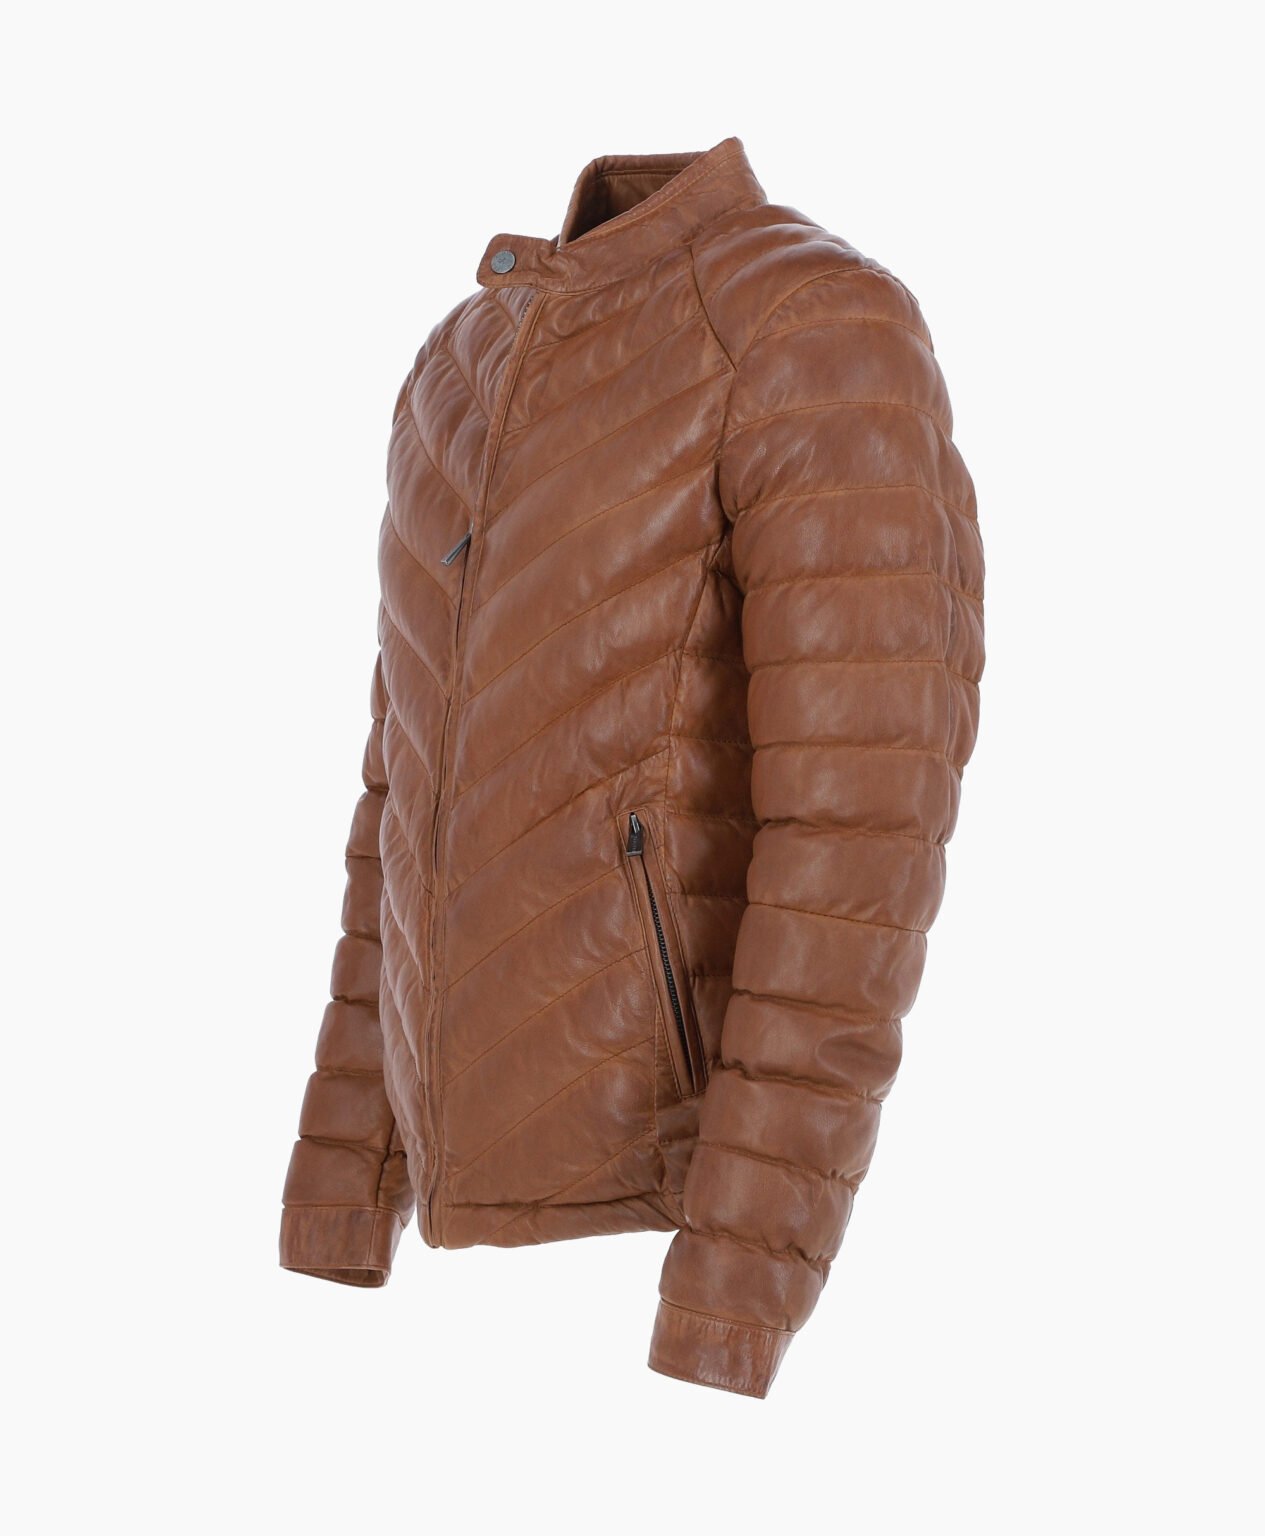 vogue-jacket-leather-puffer-jacket-tan-prescott-image201